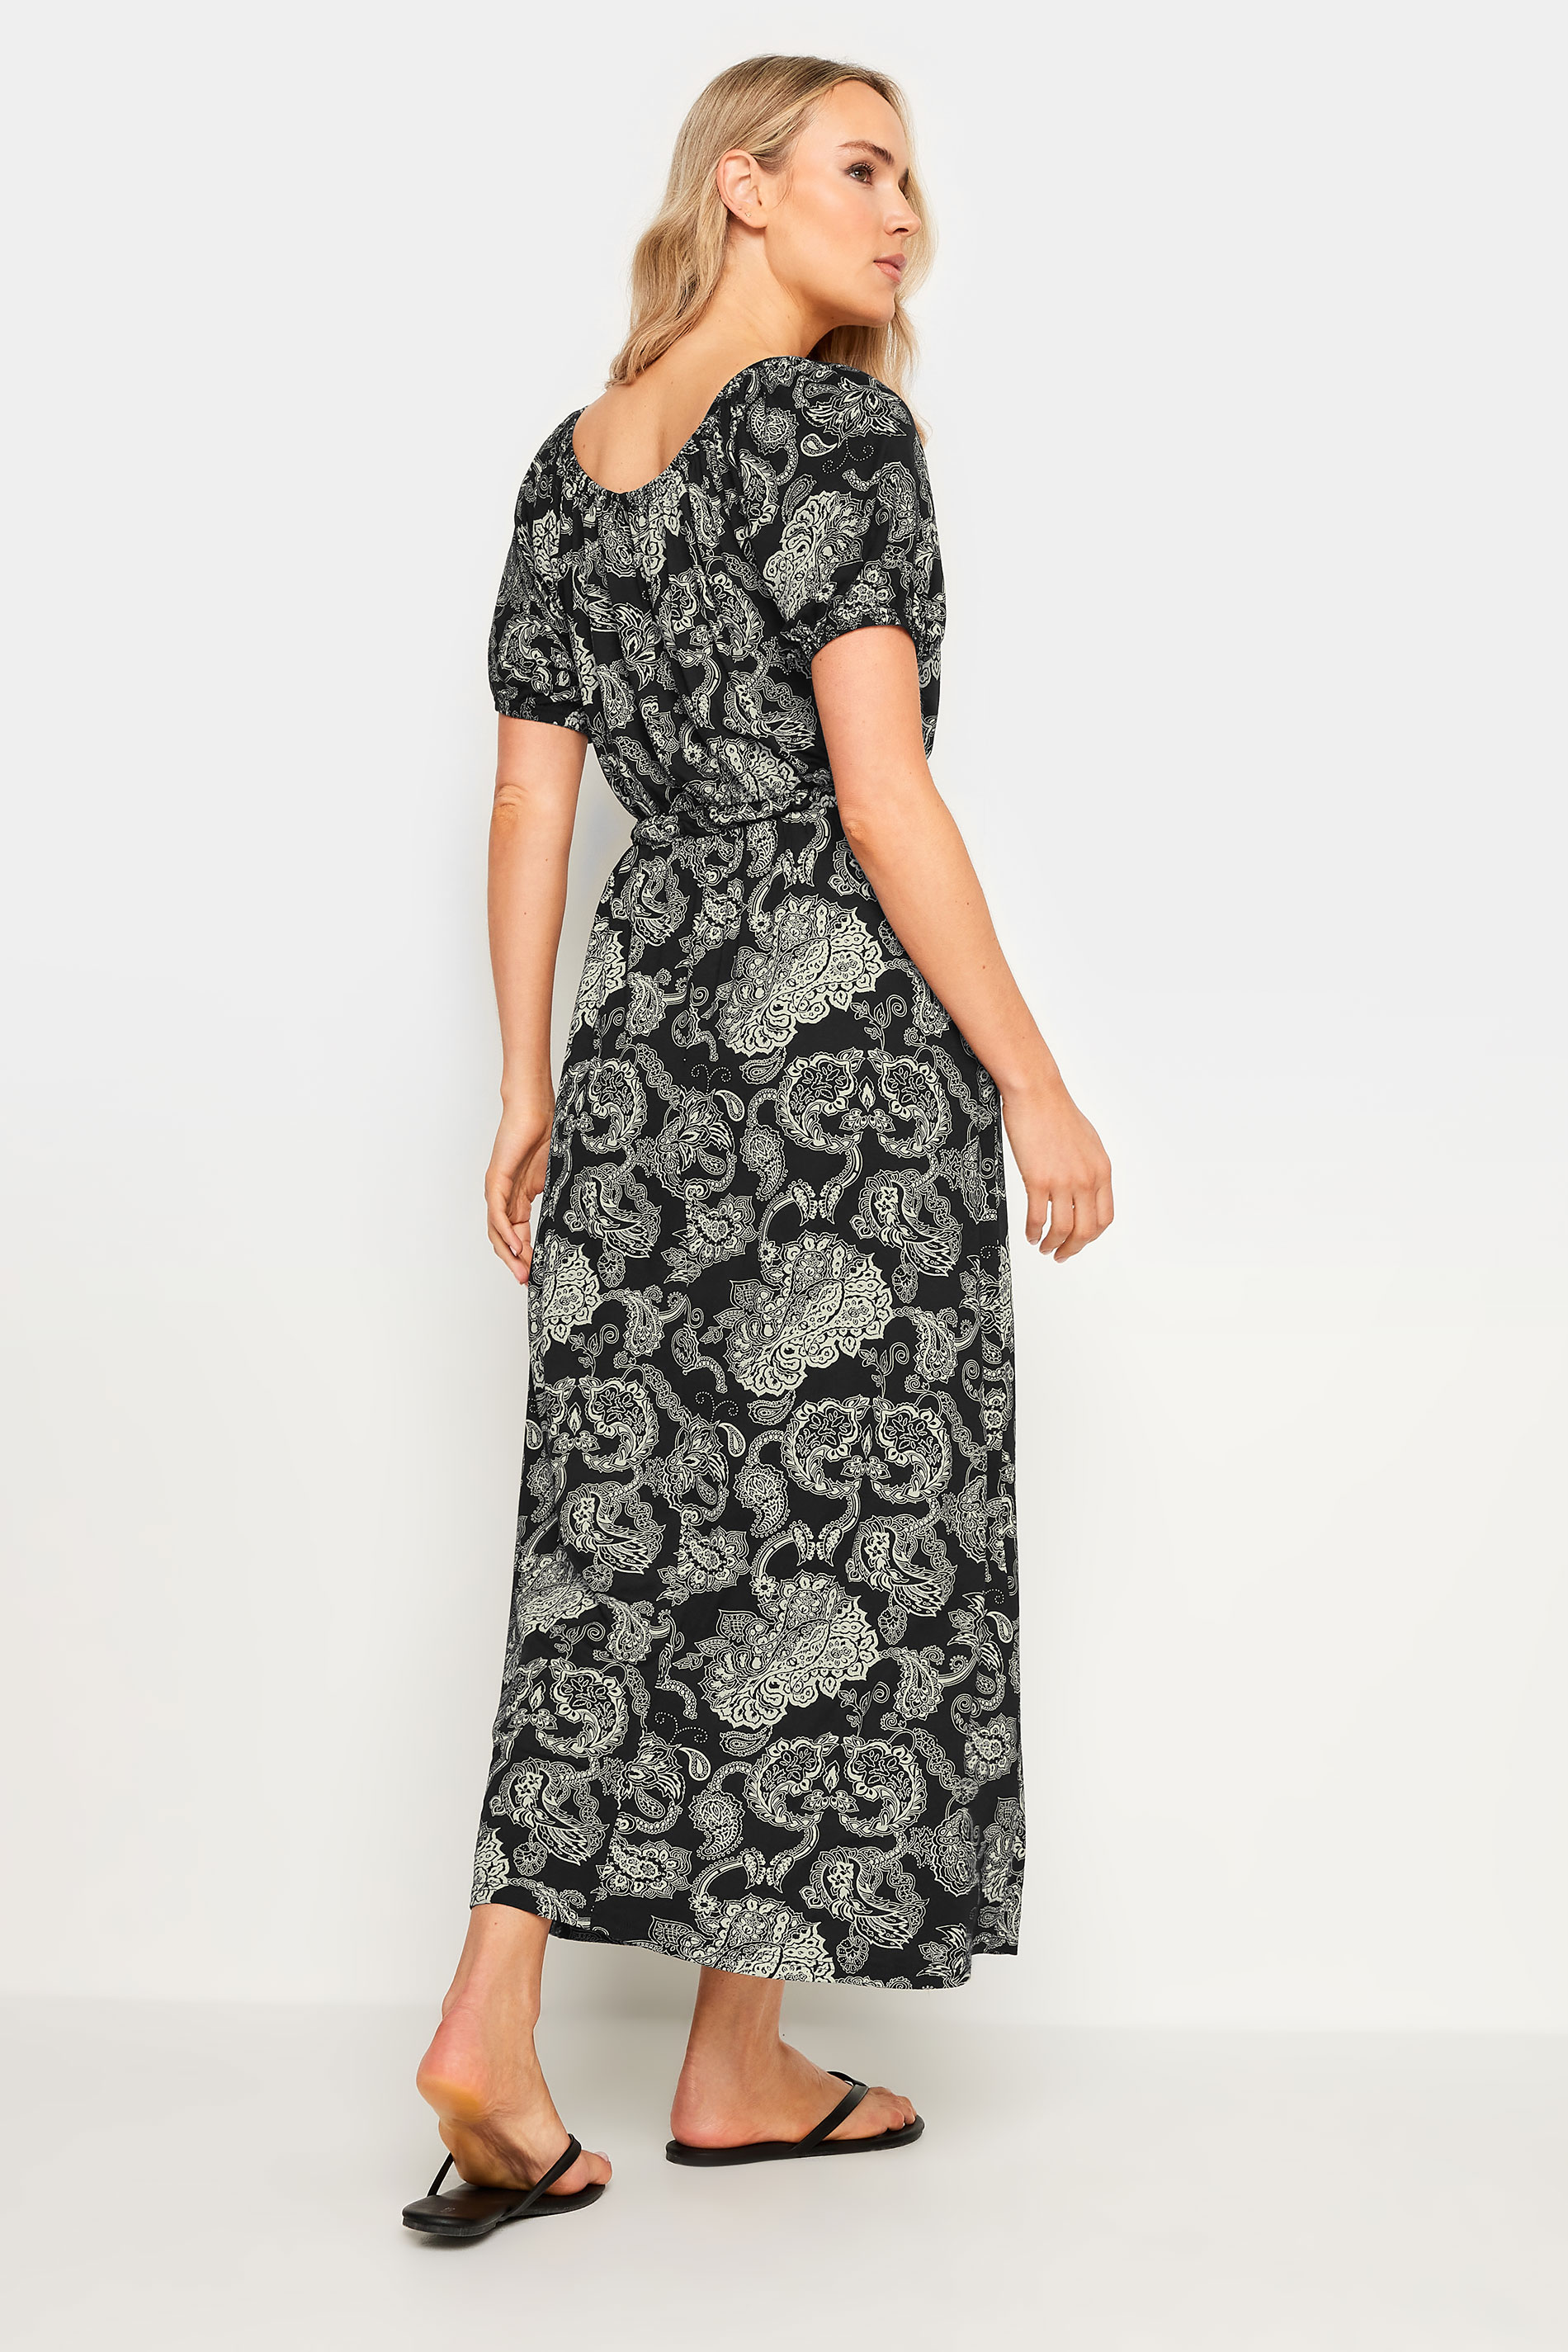 LTS Tall Women's Black Paisley Print Bardot Midaxi Dress | Long Tall Sally 3